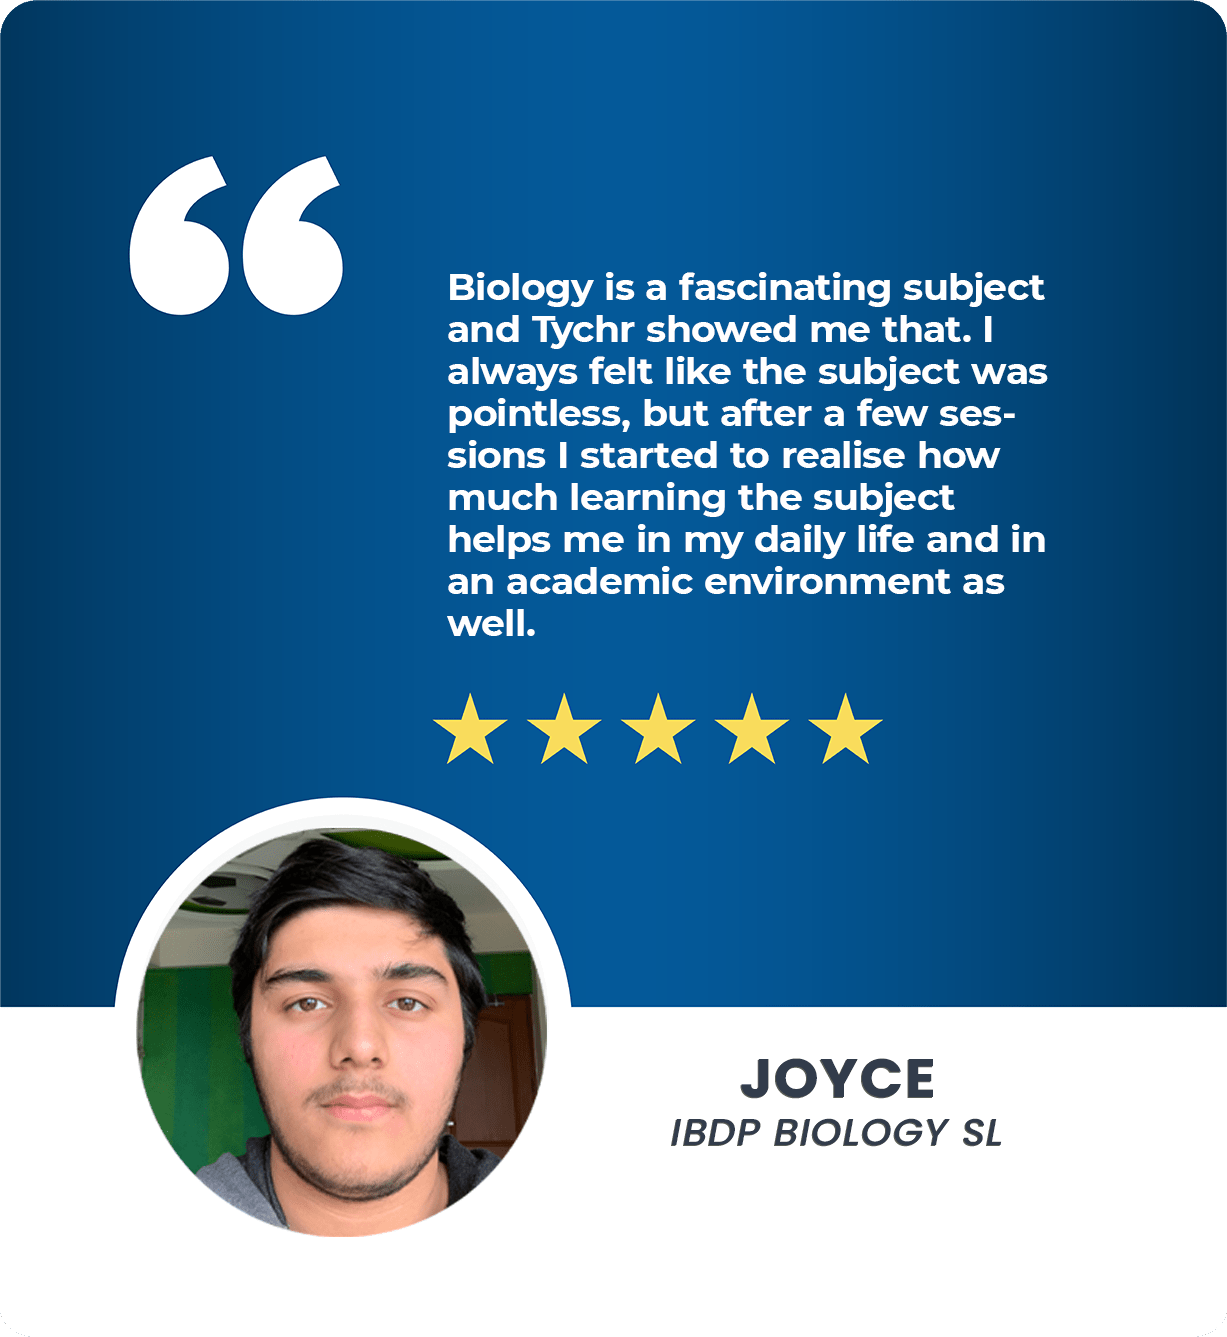 JOYCE-IBDP-BIOLOGY-SL